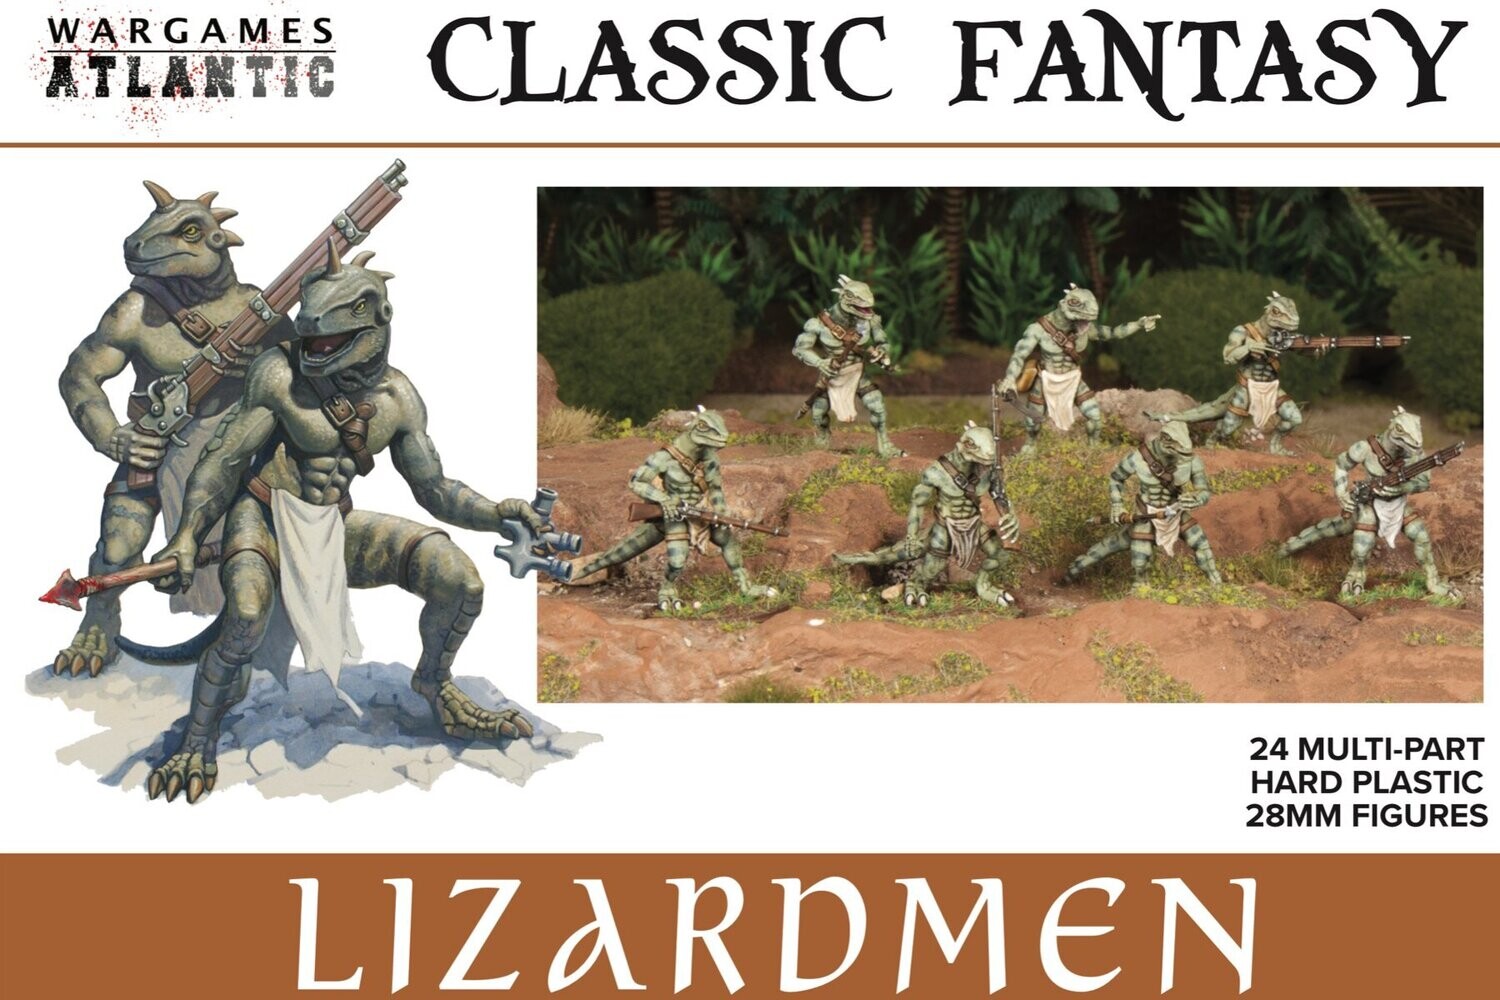 Lizardmen - Classic Fantasy - Wargames Atlantic